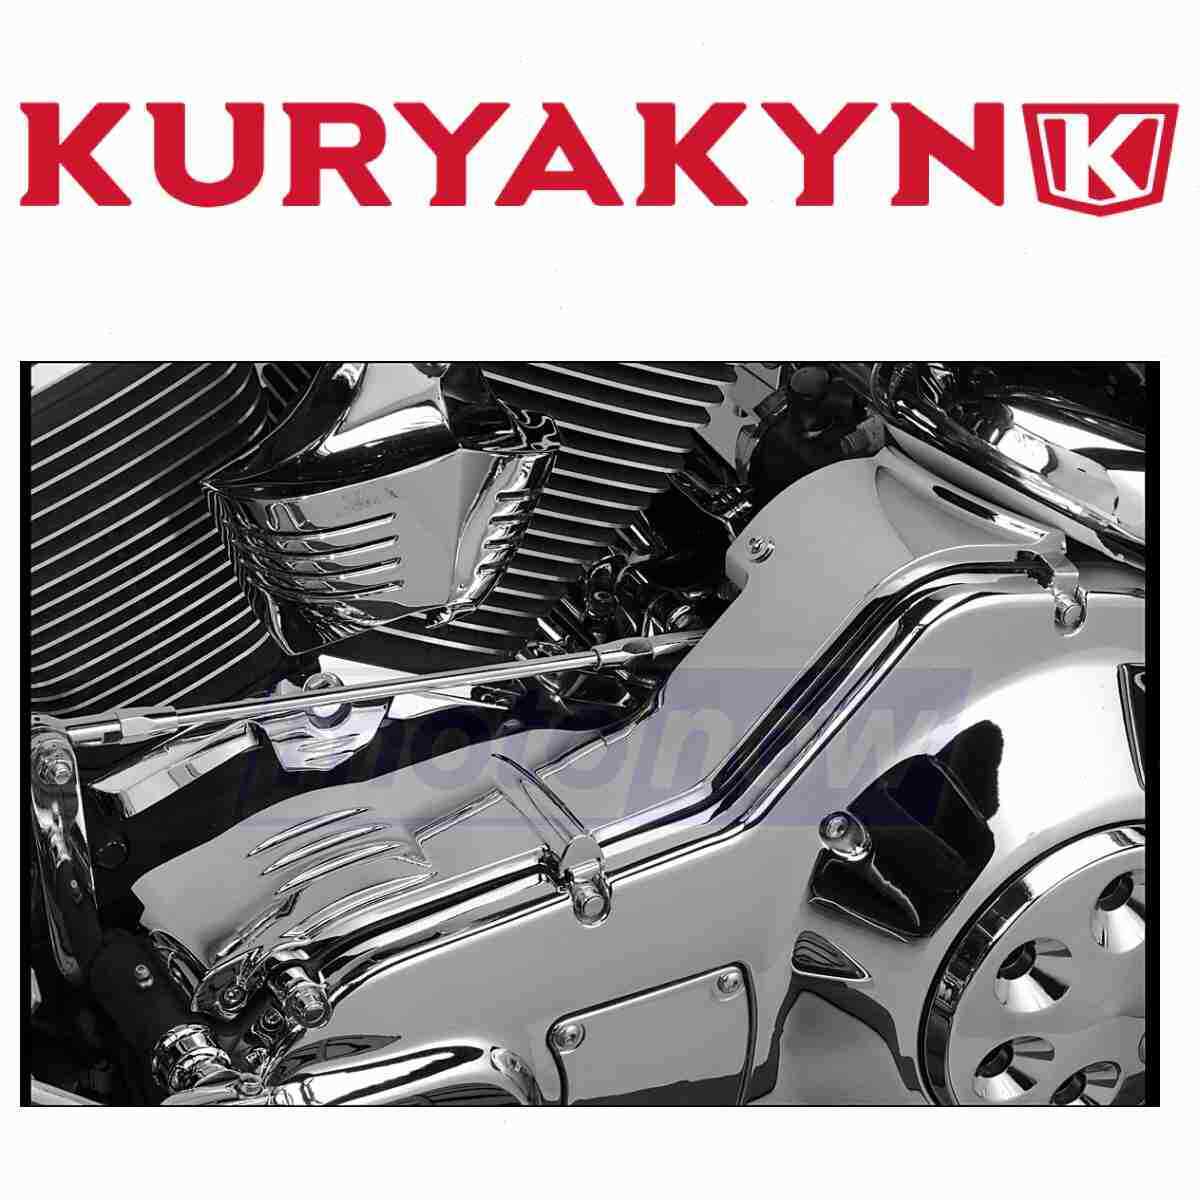 Kuryakyn Deluxe Inner Primary Cover for 1994-2006 Harley Davidson FLHR Road xh